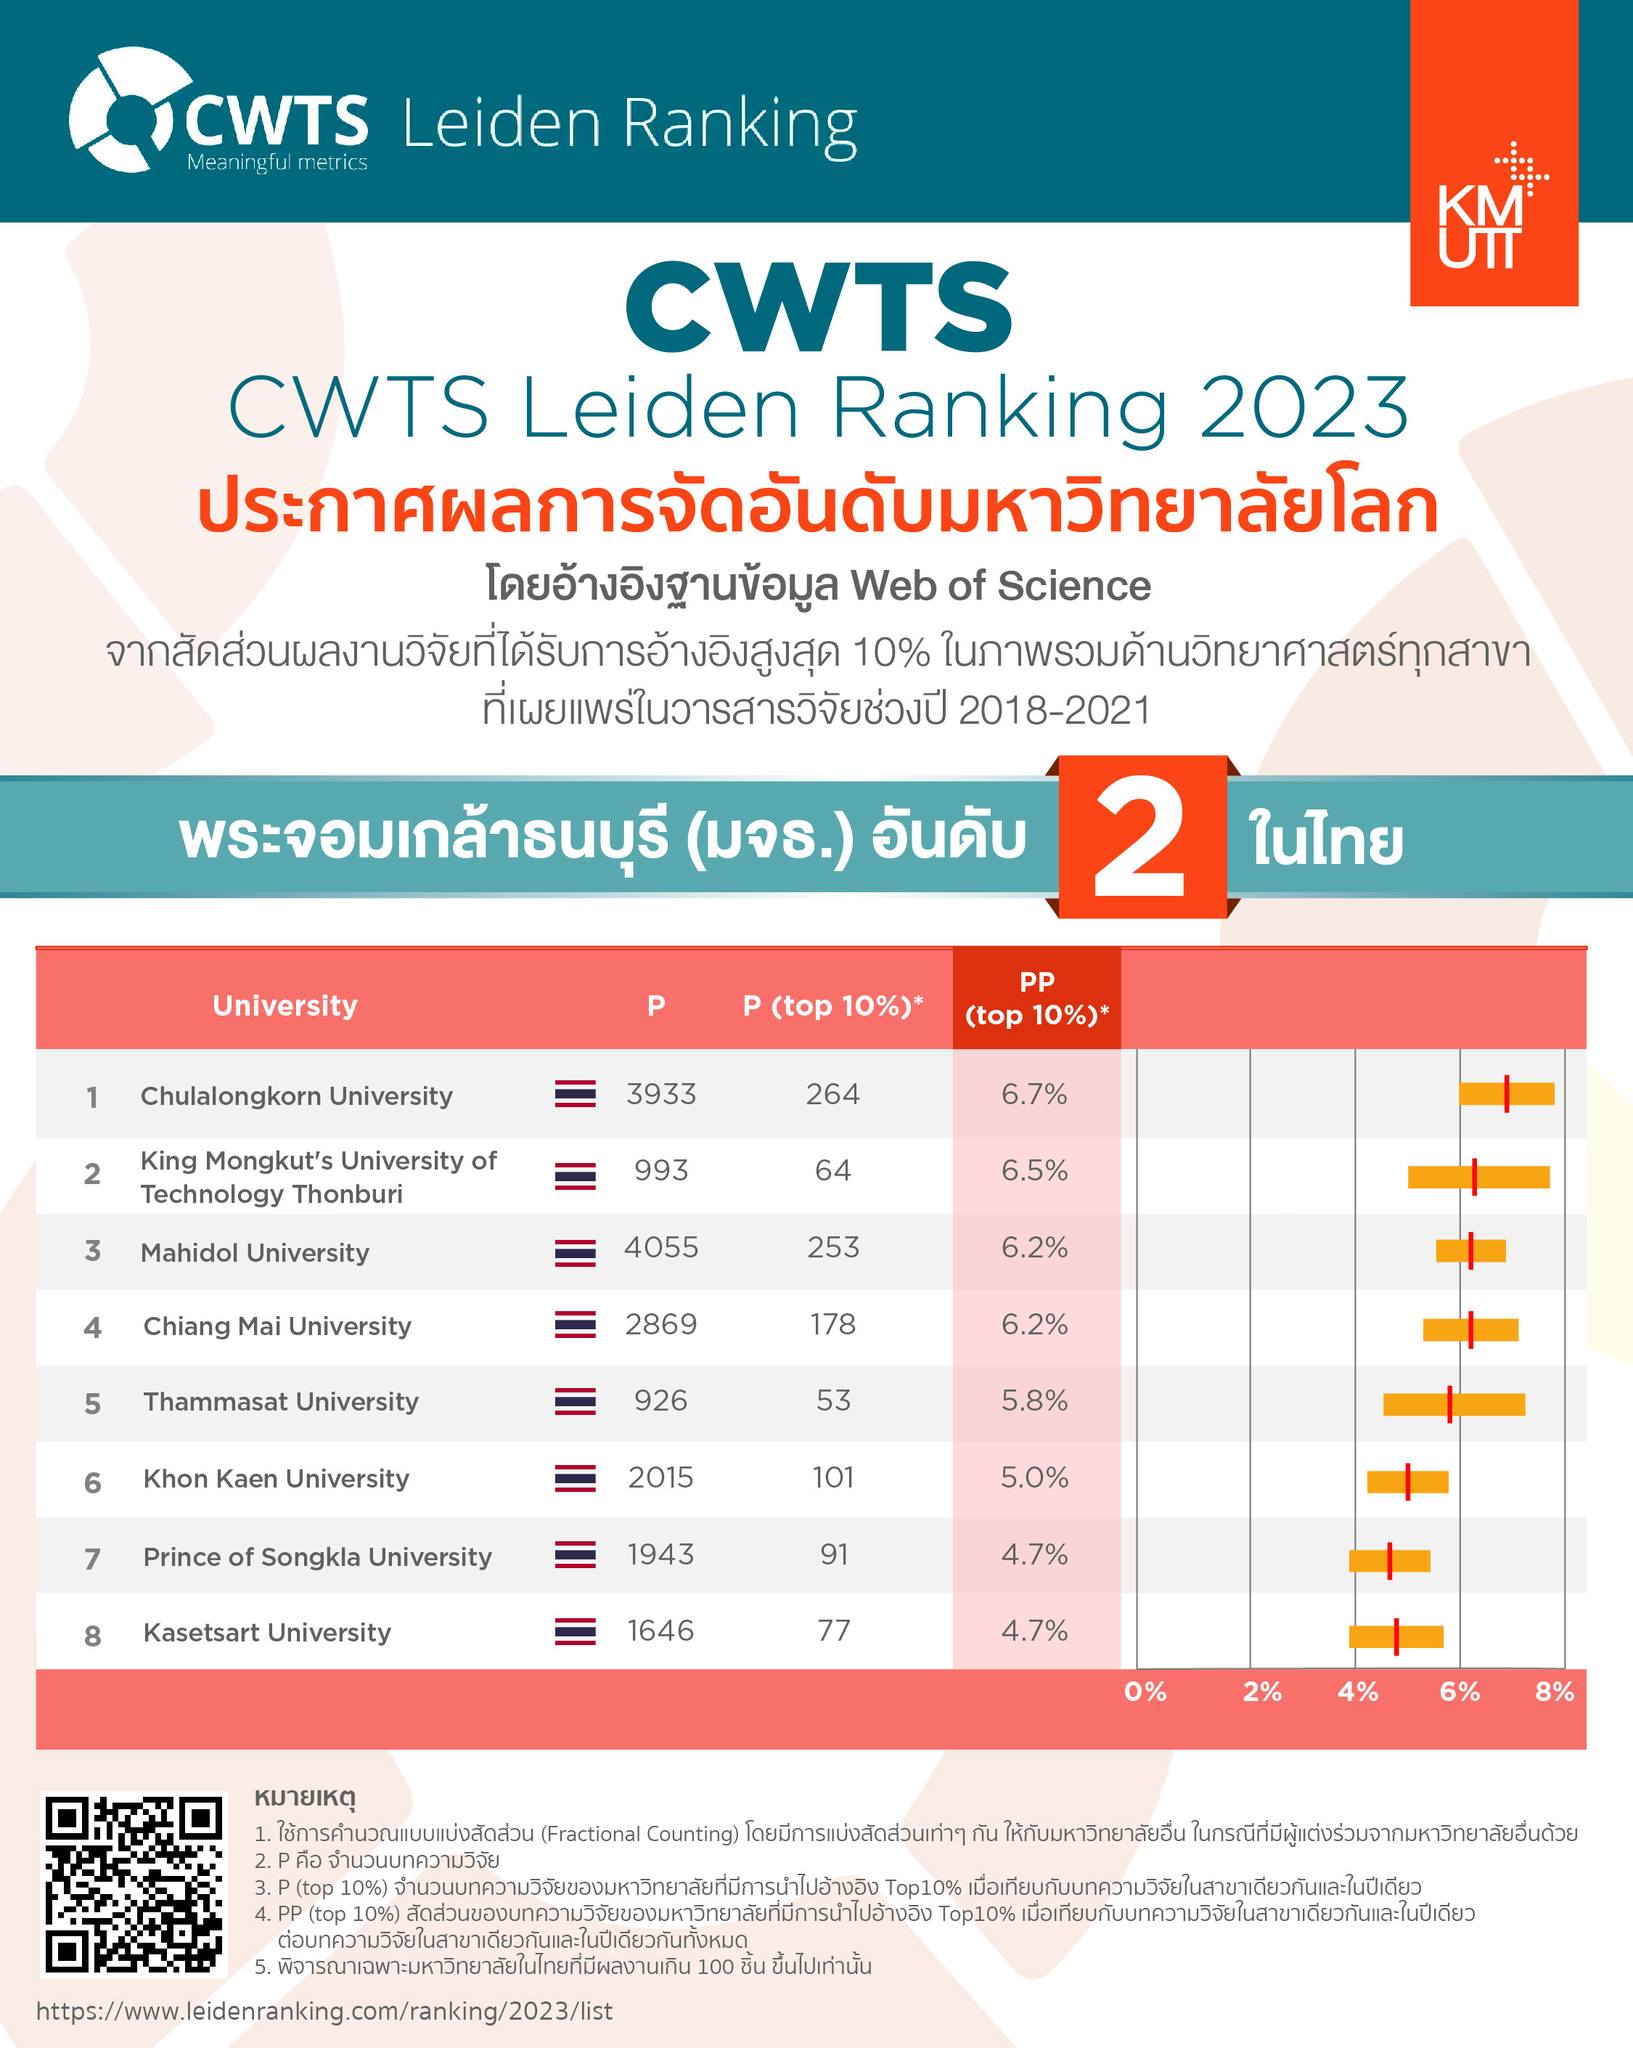 CWTS Leiden Ranking 2023  มหาวิทยาลัยเทคโนโลยีพระจอมเกล้าธนบุรี (มจธ.) อันดับ 2 ในไทย จากประกาศผลการจัดอันดับมหาวิทยาลัยโลก โดยอ้างอิงฐานข้อมูล Web of Science